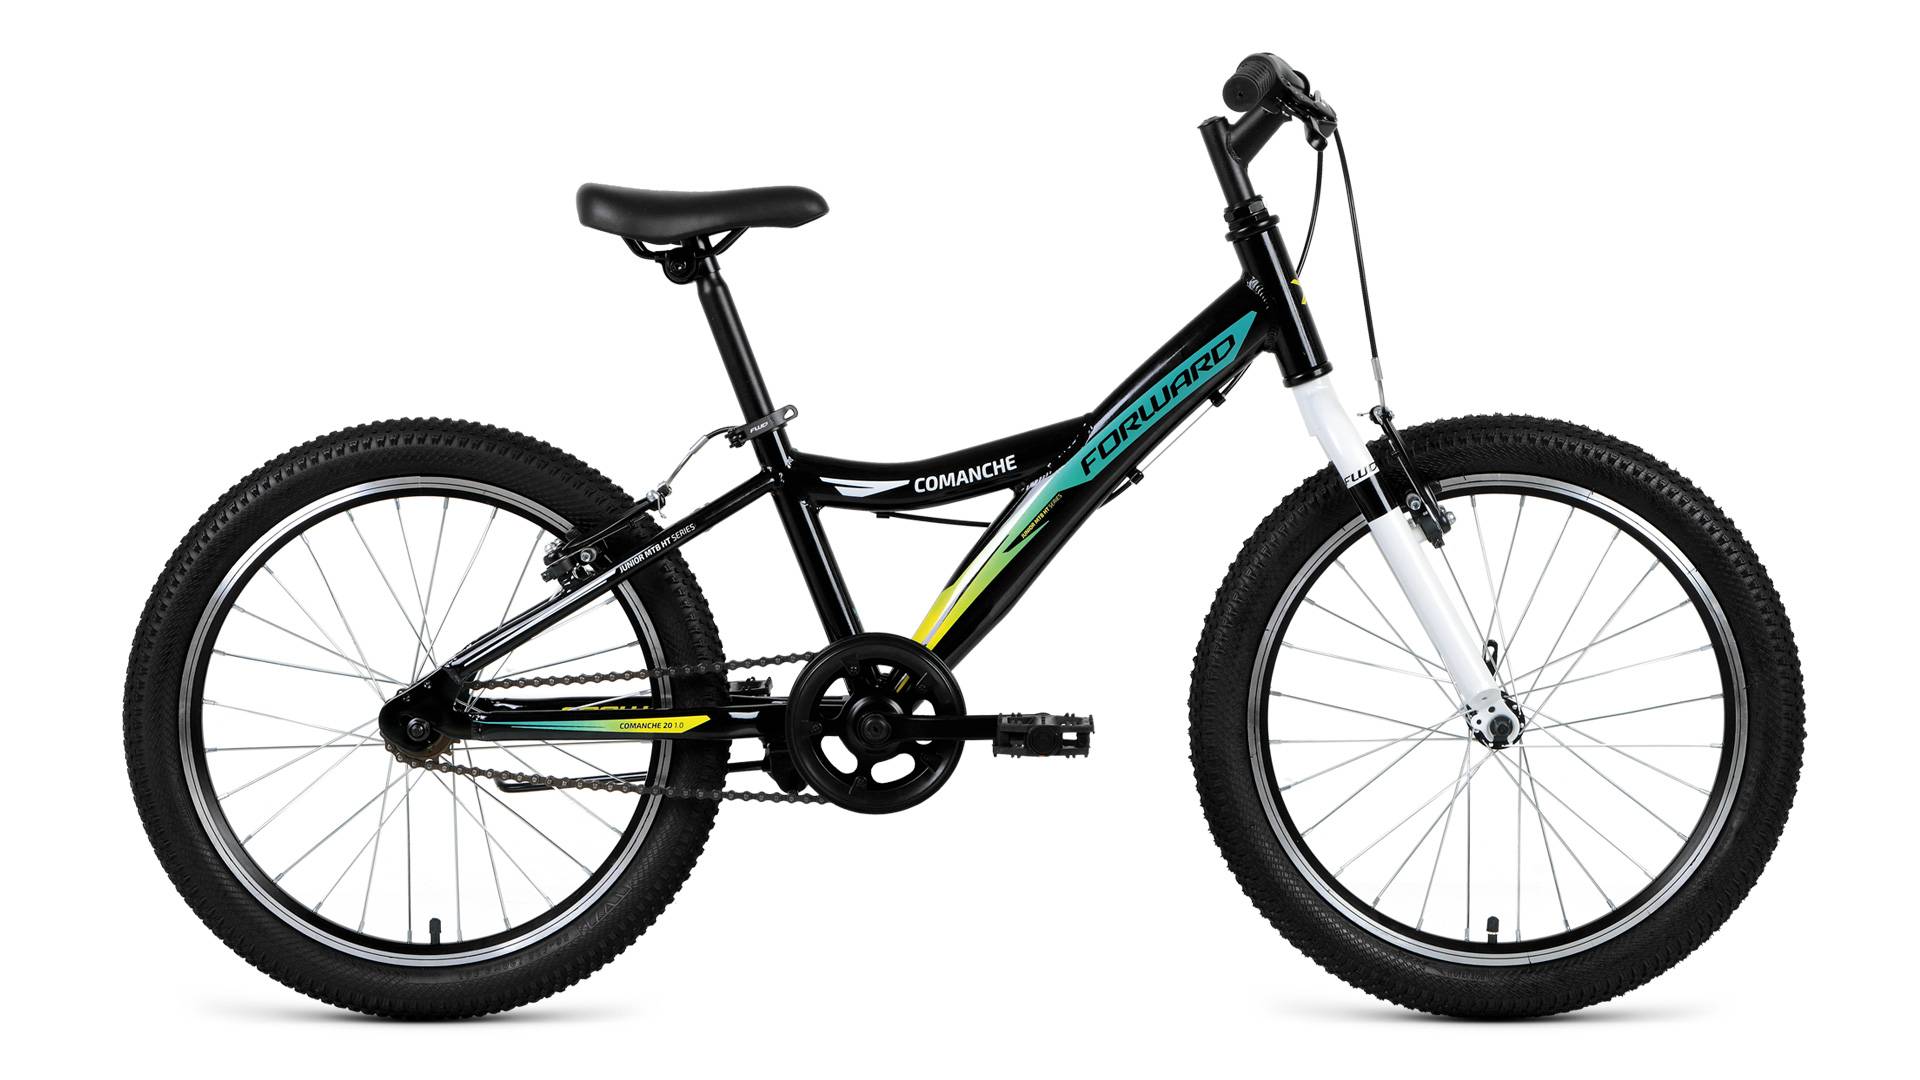 COMANCHE 20 1.0 (рост 10.5") 2018-2019, черный/зеленый, RBKW91601002 от Forward.bike